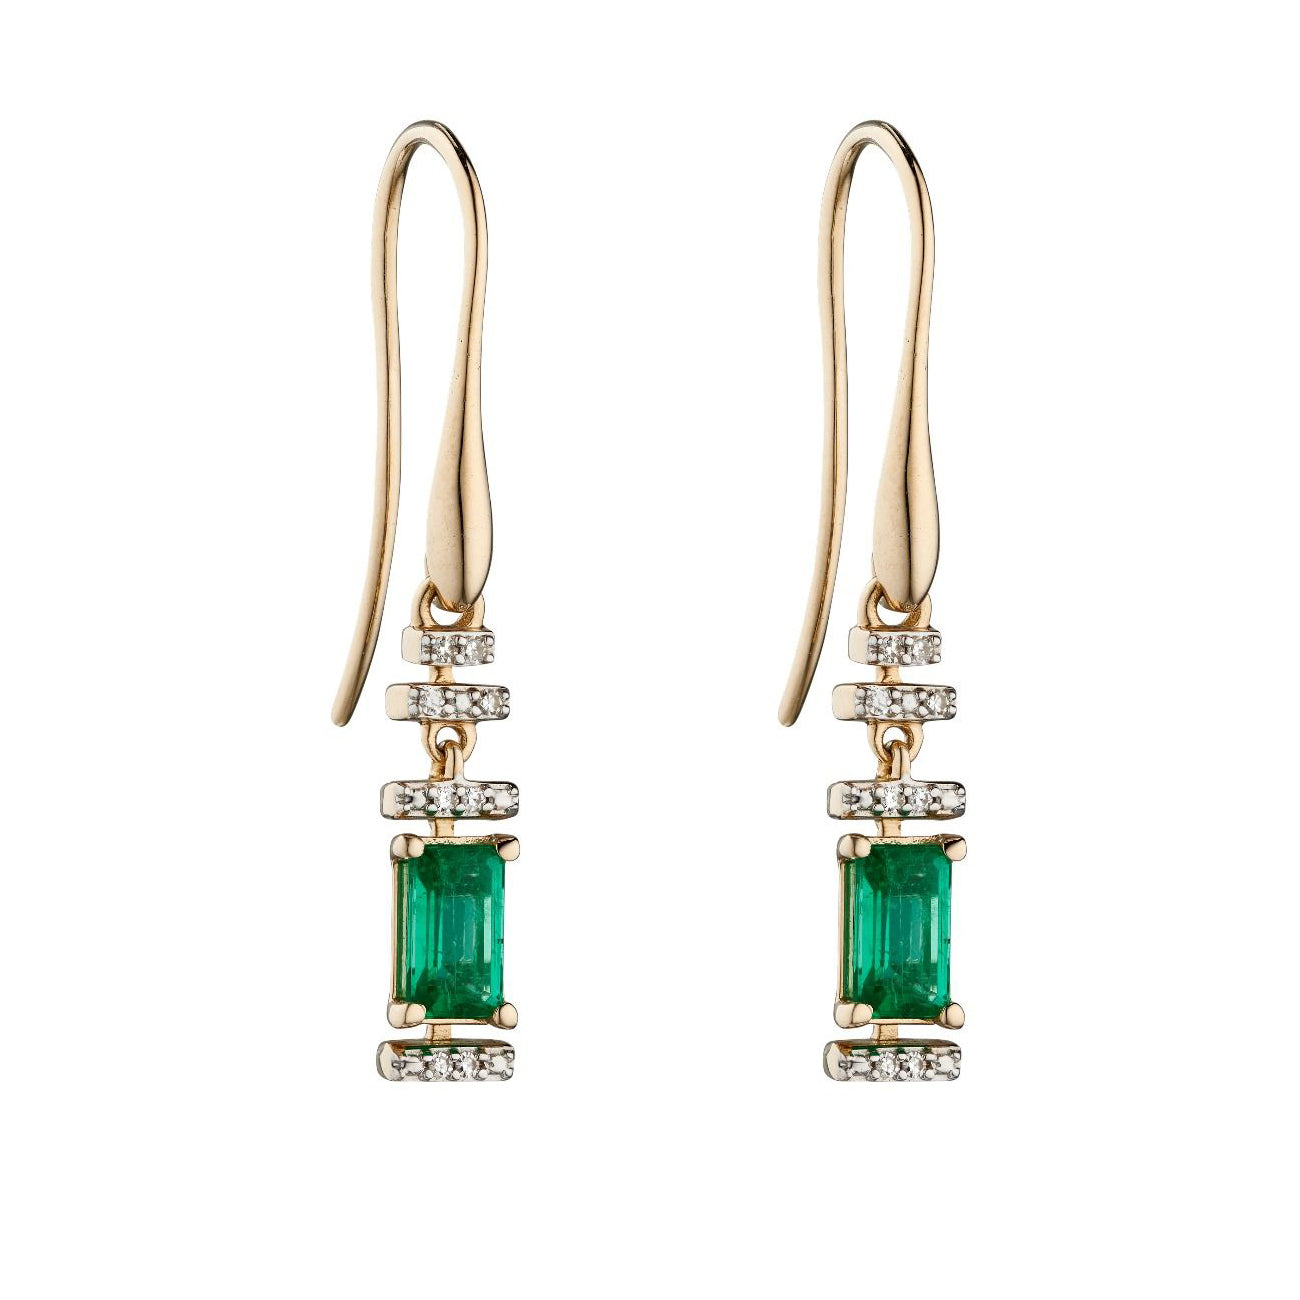 Emerald Art Deco Drop Earrings in 9ct Yellow Gold